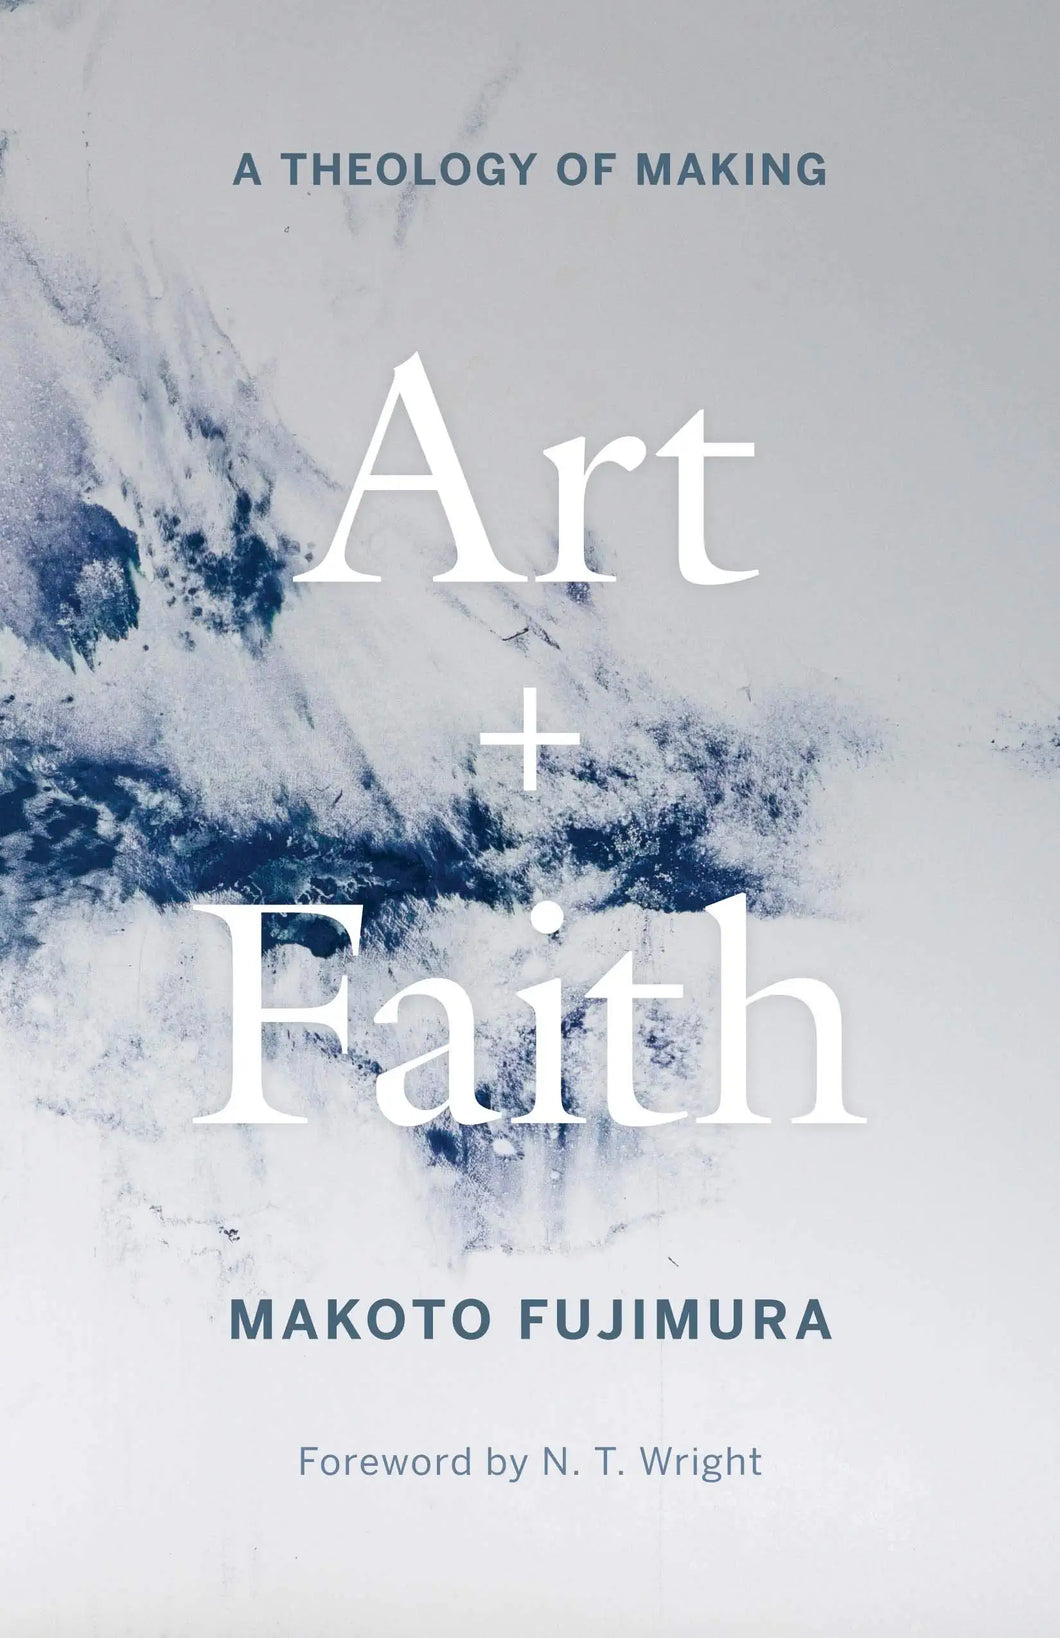 Art and Faith: A Theology of Making by Makoto Fujimura